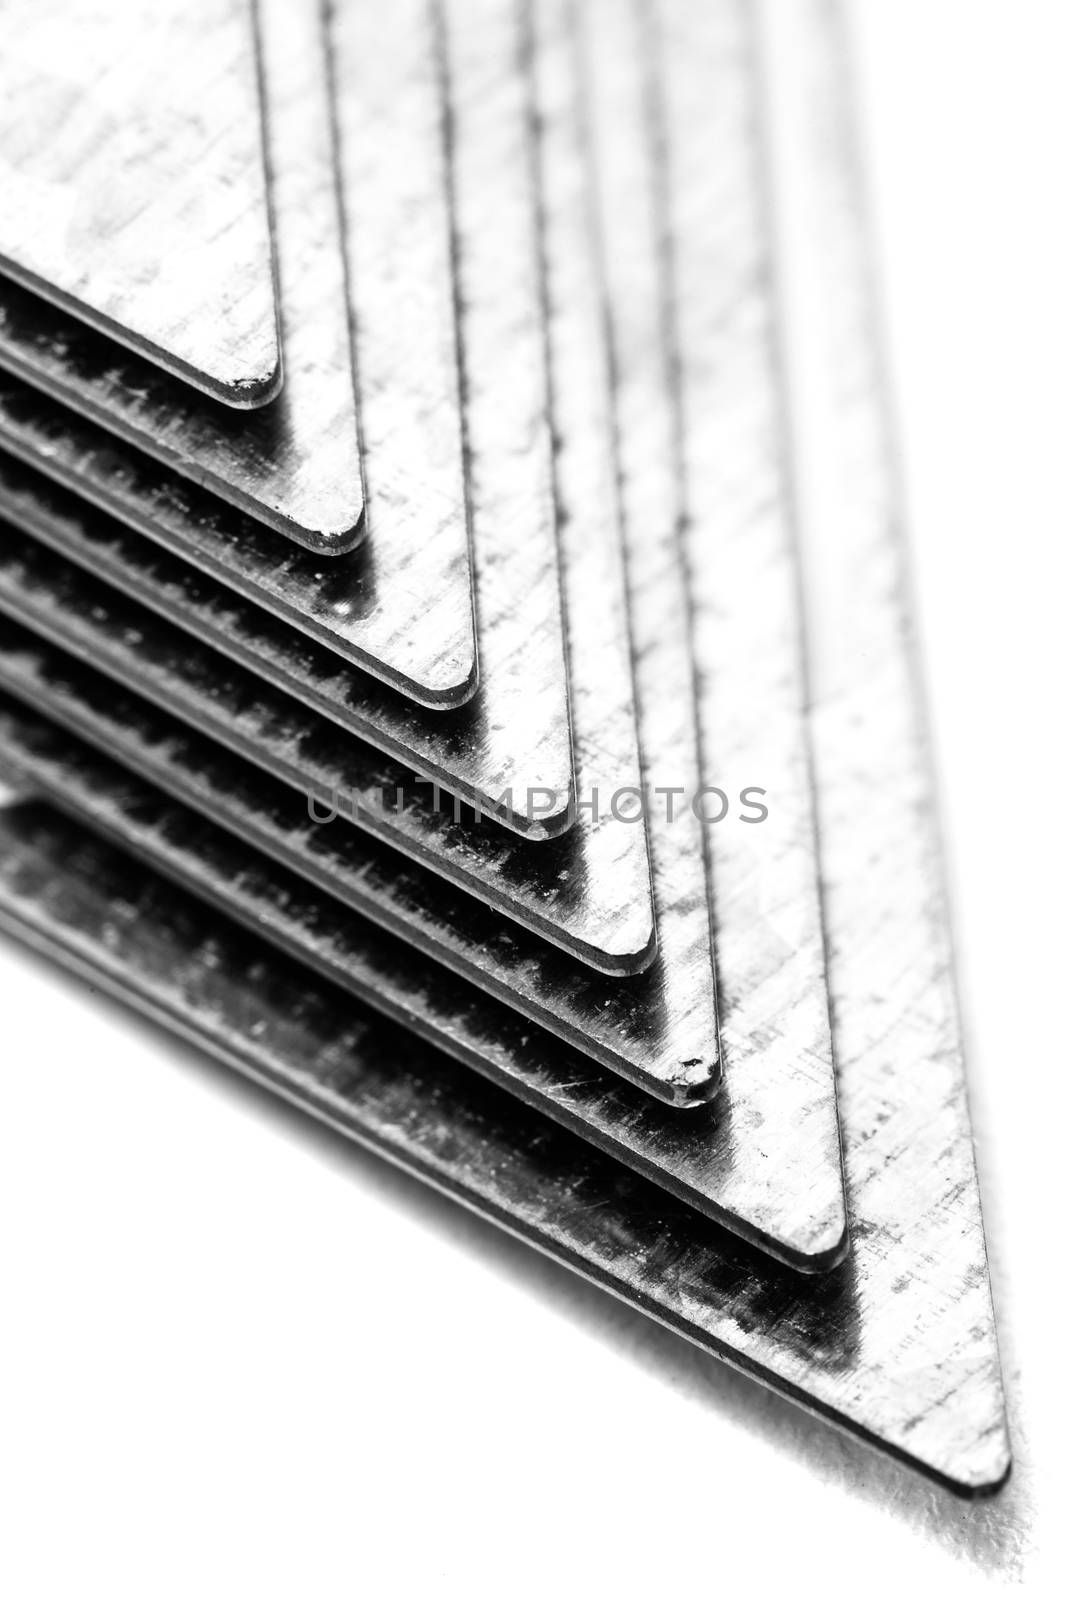 triangular metal fixators by kokimk